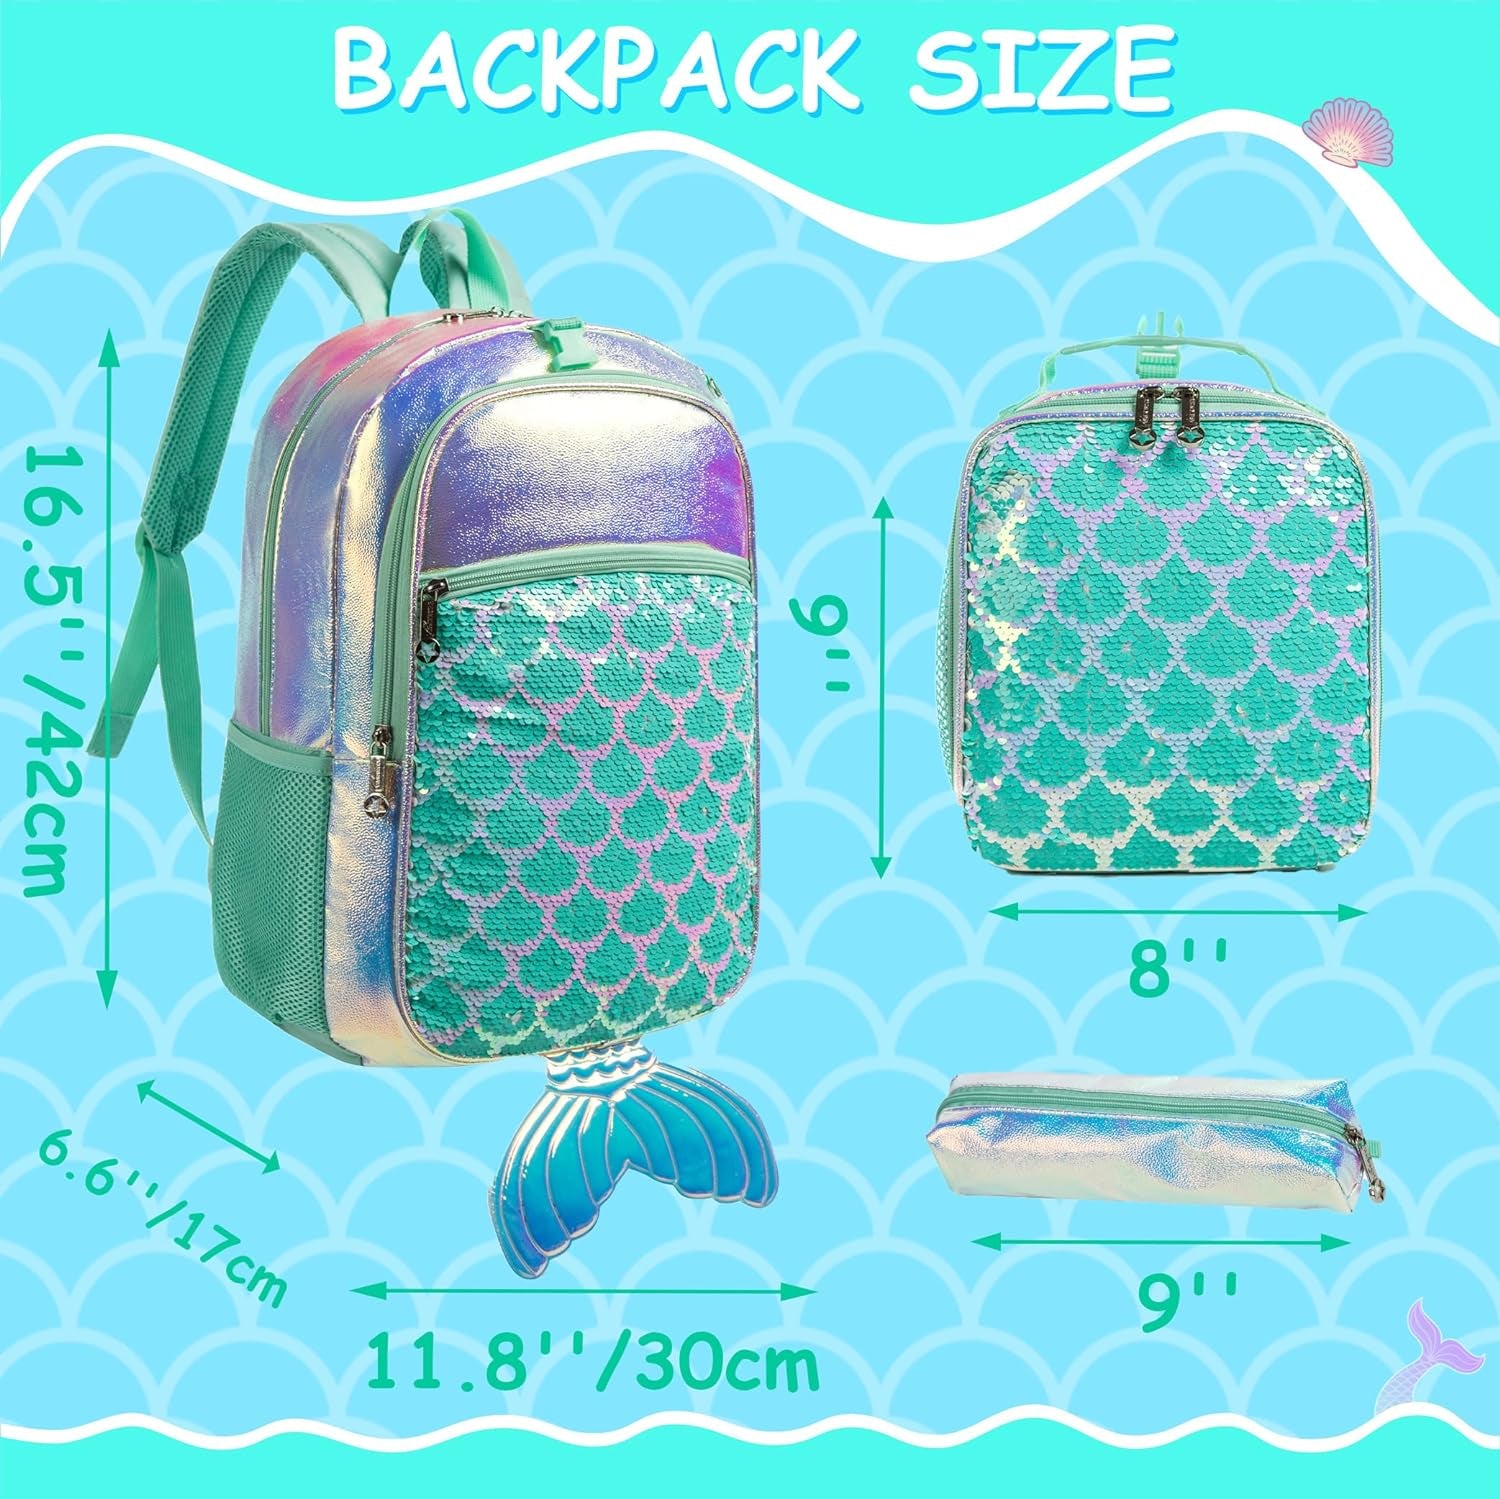 Backpacks for Girls,Kids School Backpacks with Lunch Box for Elementary Preschool Students Cute Panda Sequin Travel Backpack 3 in 1 Bookbag Set for Girls